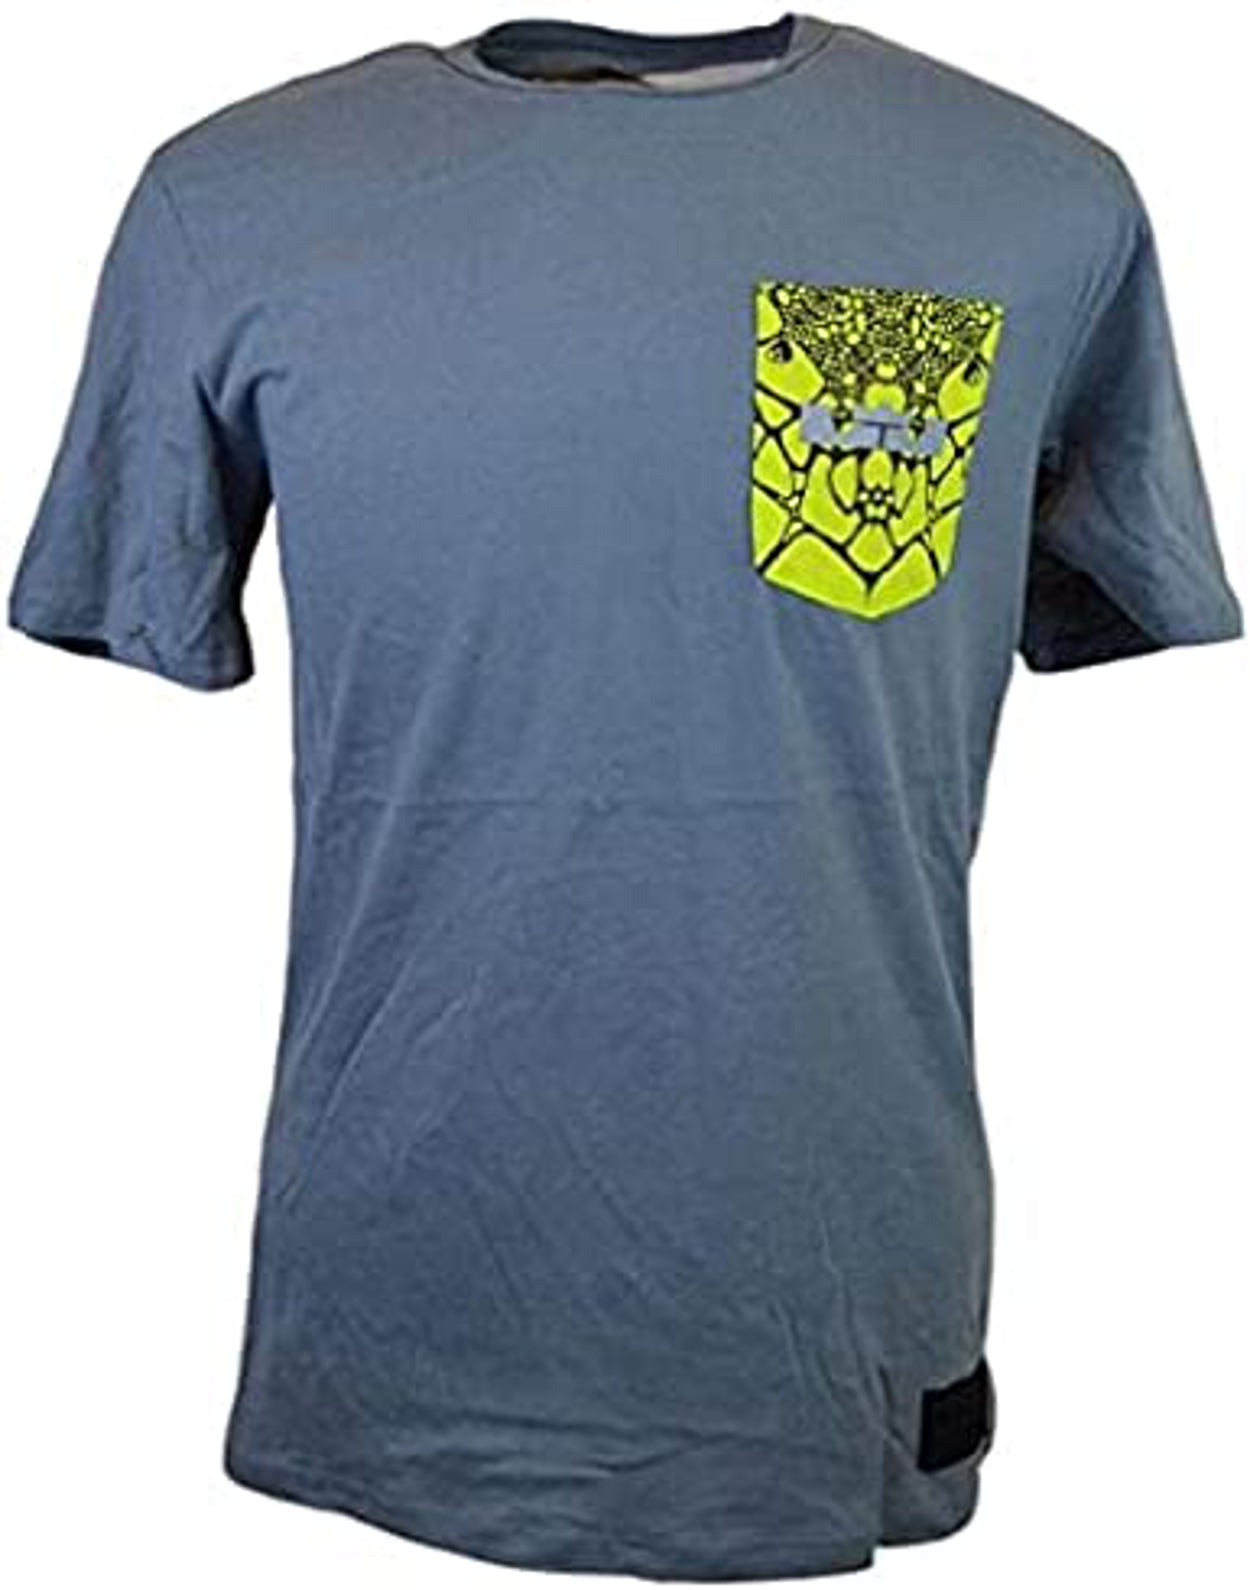 Nike Mens Lebron Genome Pocket T-Shirt - image 2 of 3